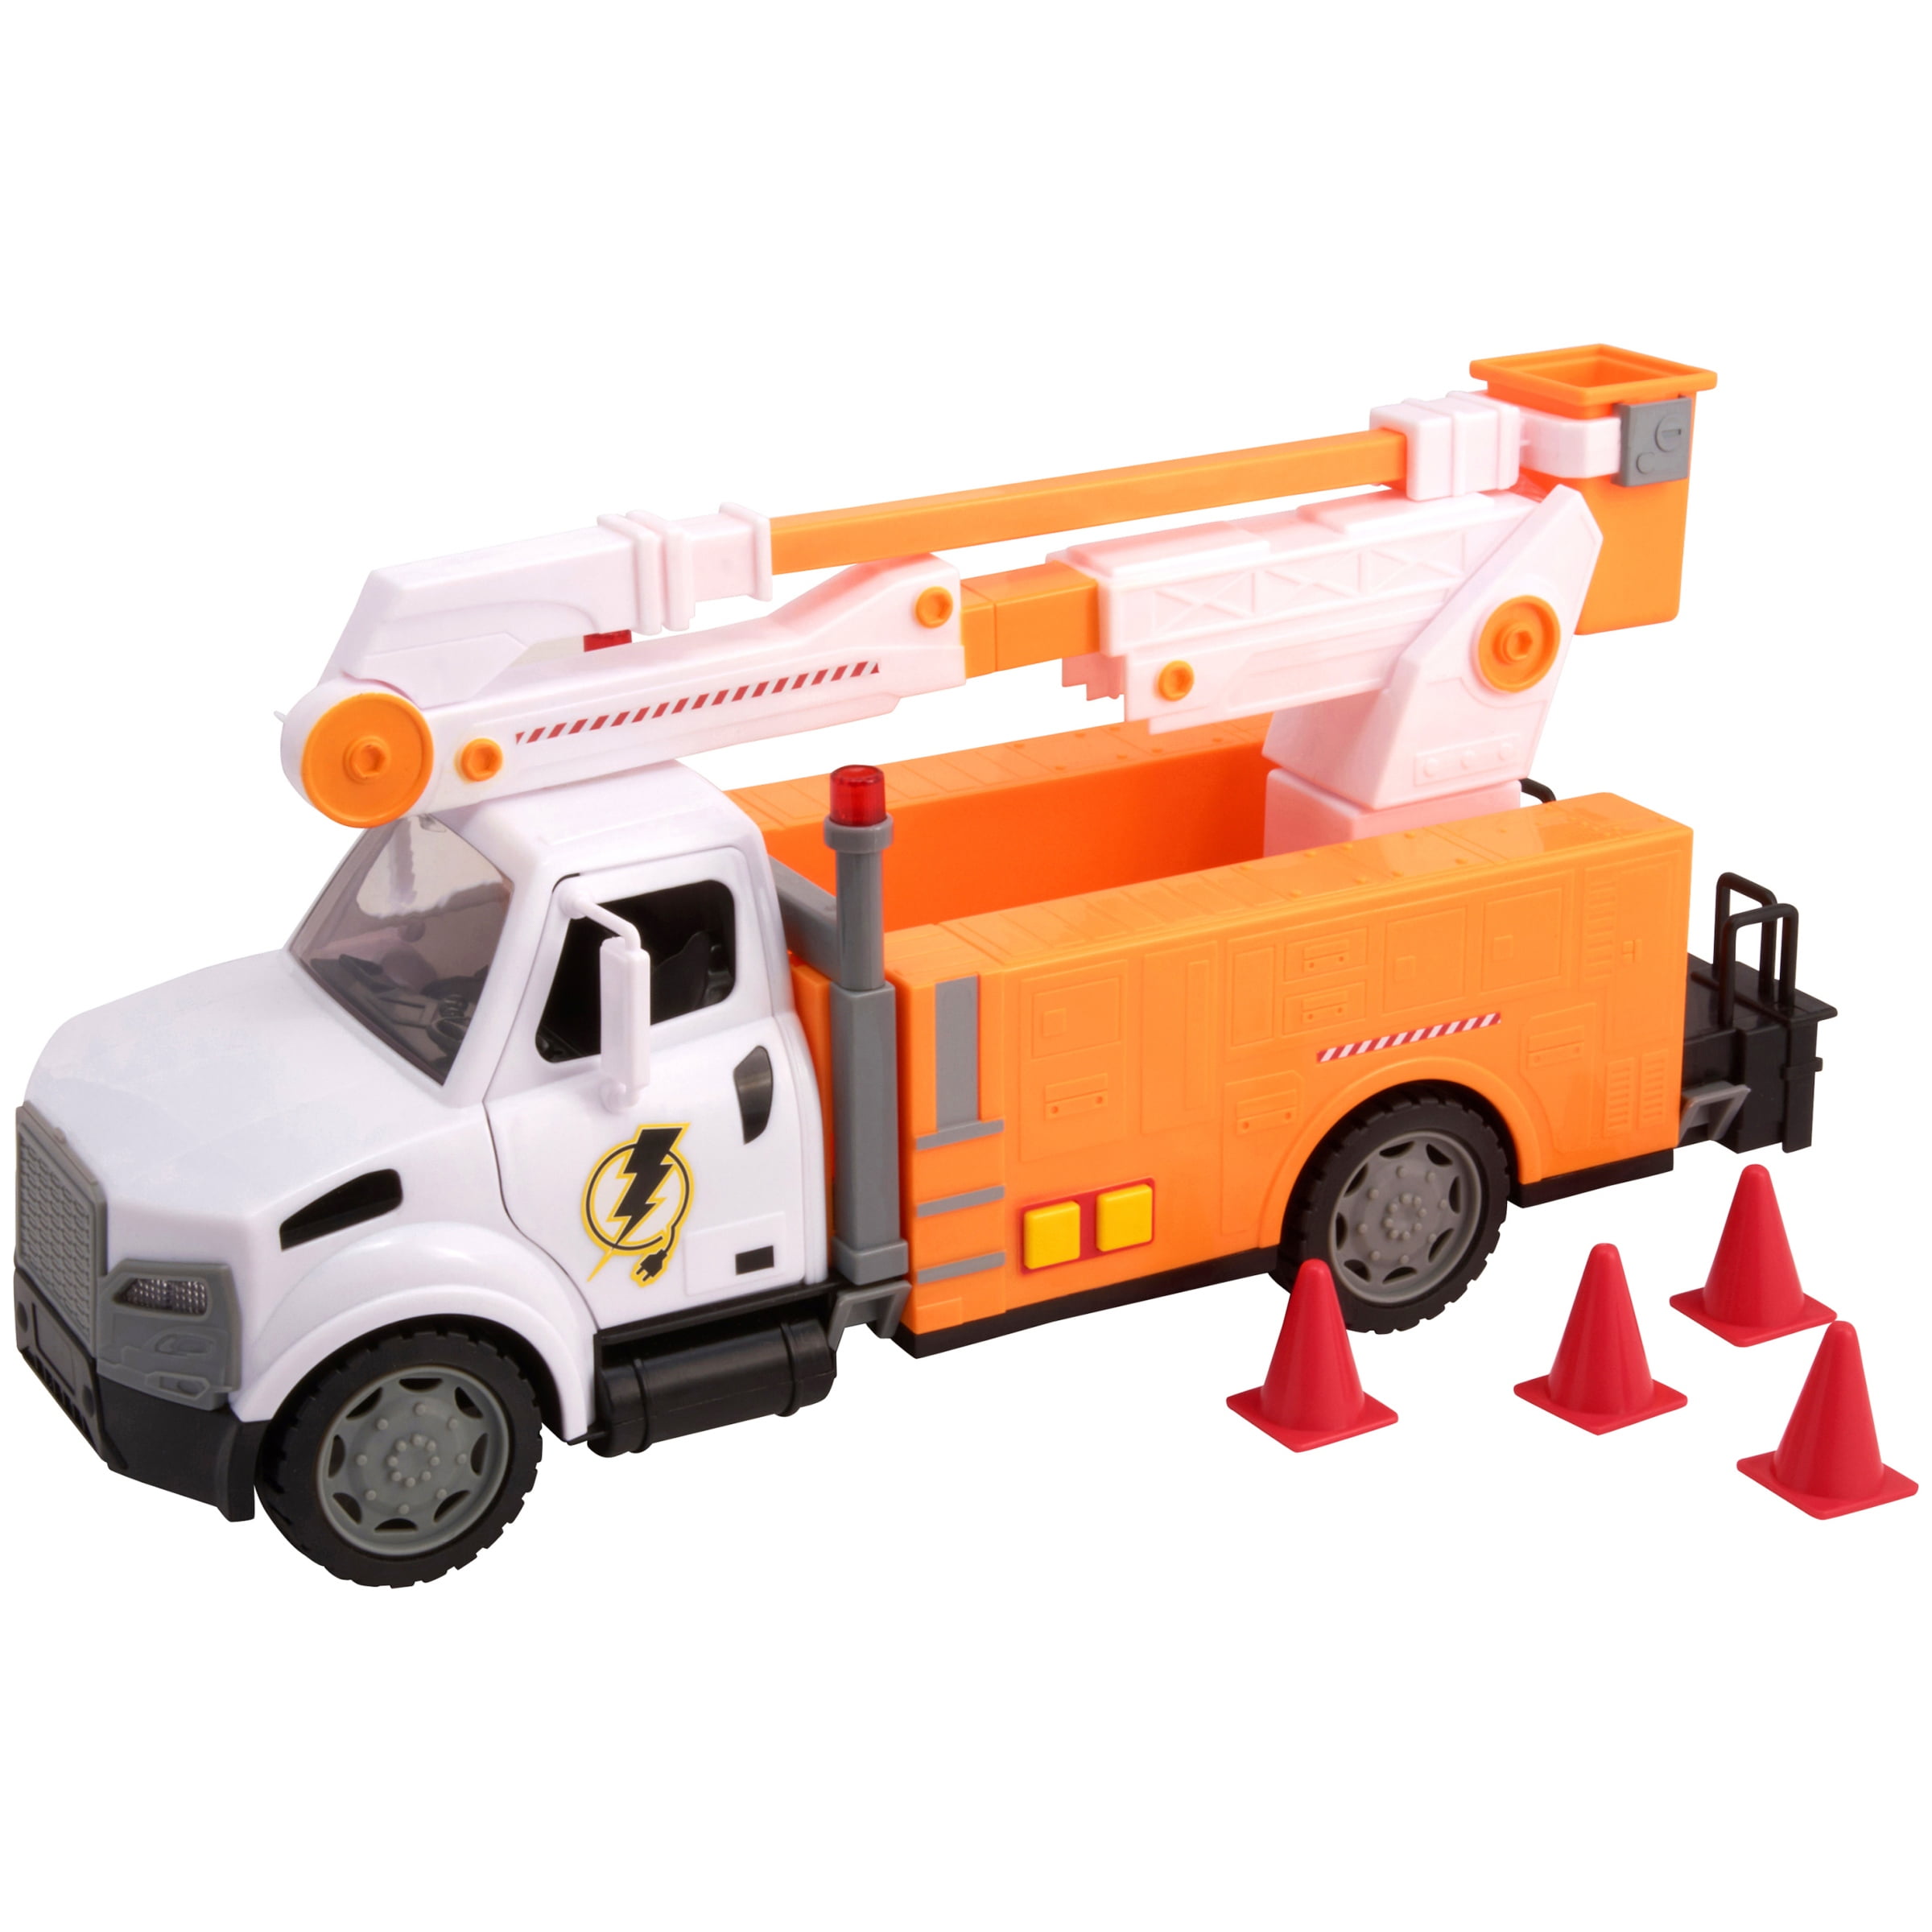 toy lineman truck